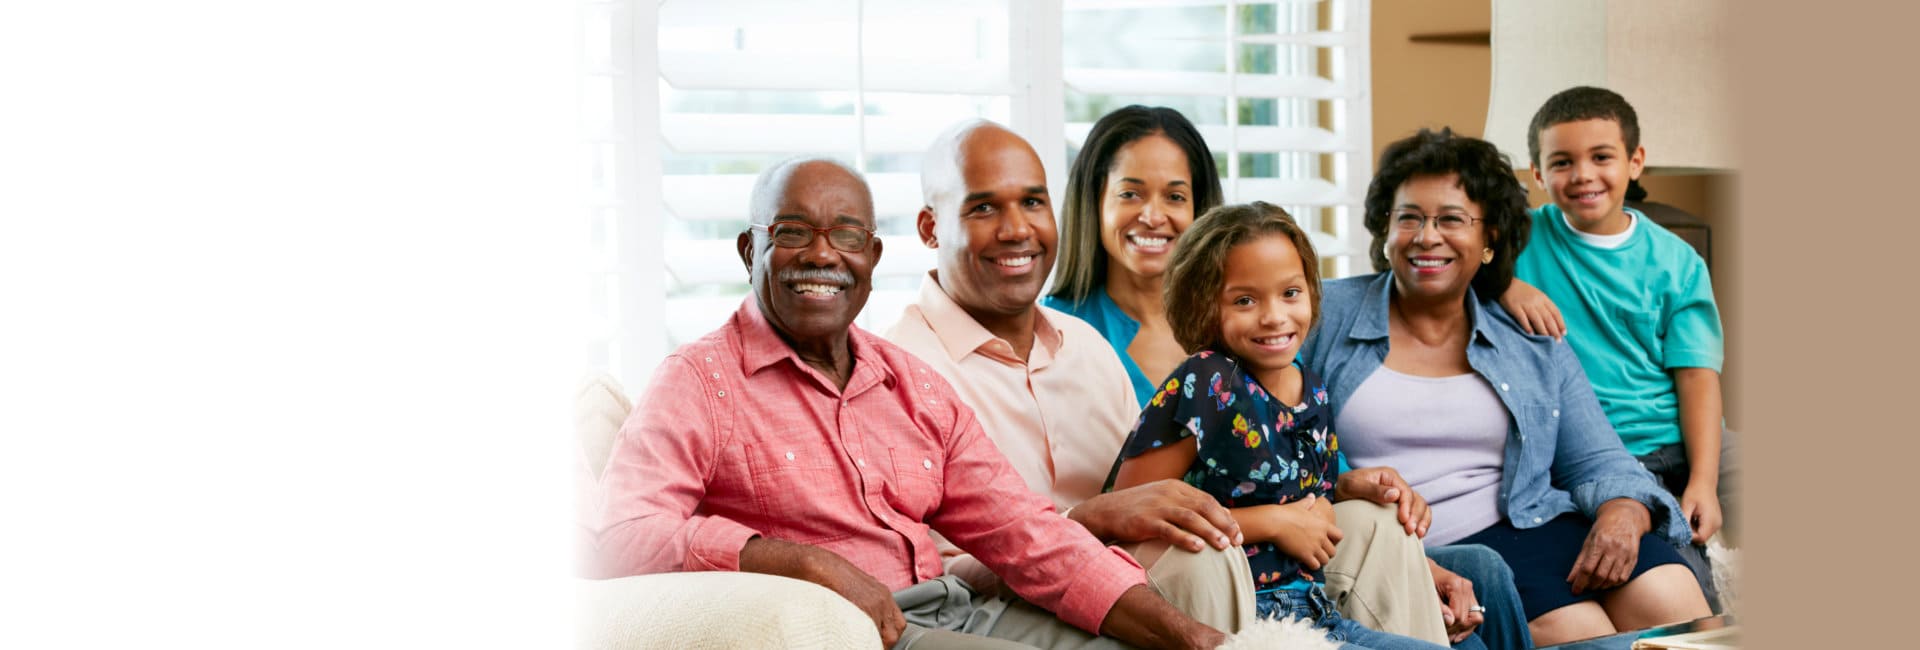 Portrait Of Multi Generation Family Smiling